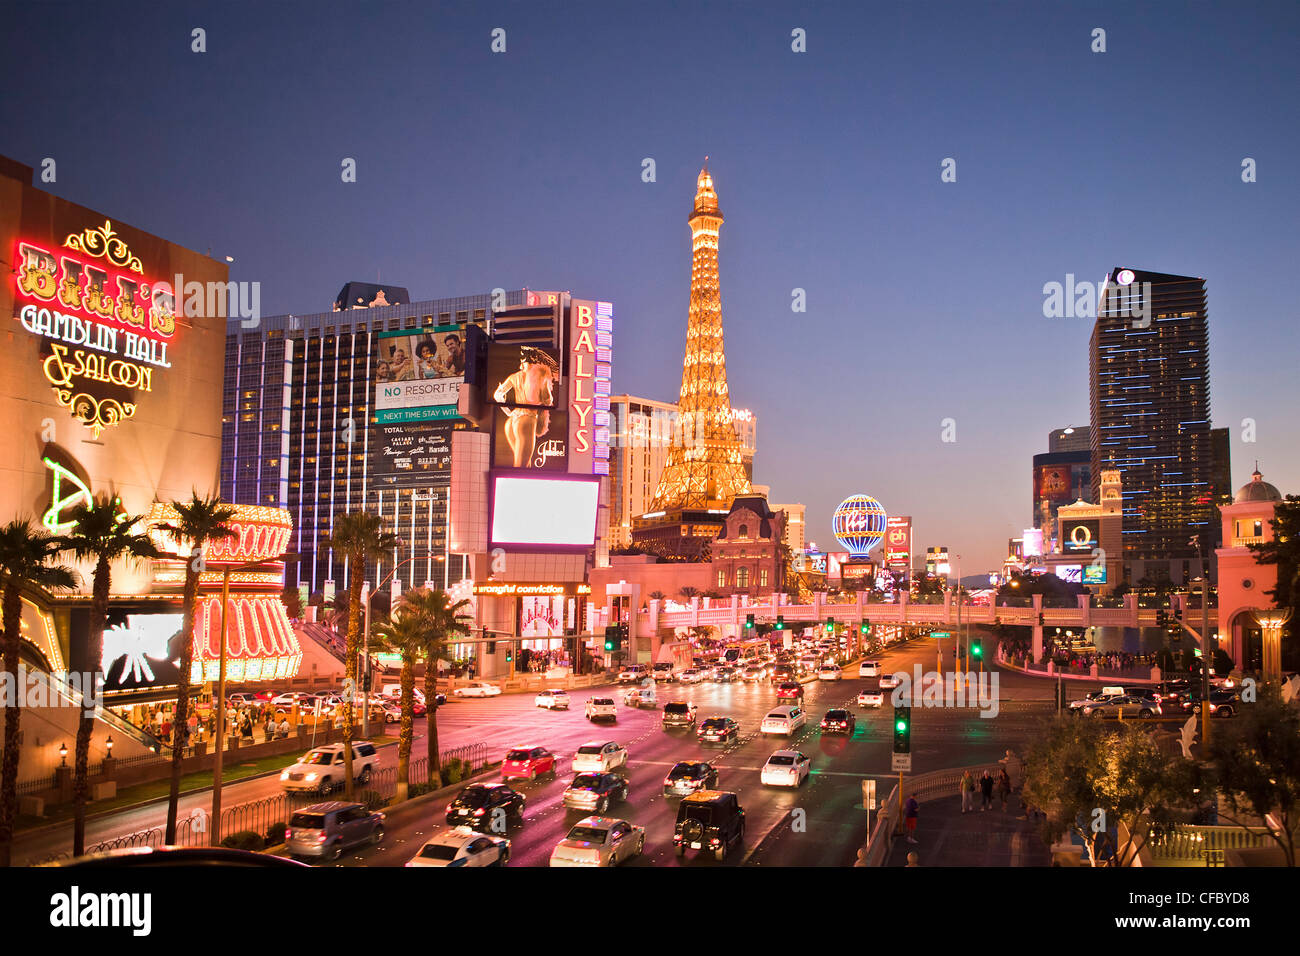 USA, United States, America, Nevada, Las Vegas, City, Strip, Avenue, Paris Hotel, advertisement, architecture, casinos, center, Stock Photo